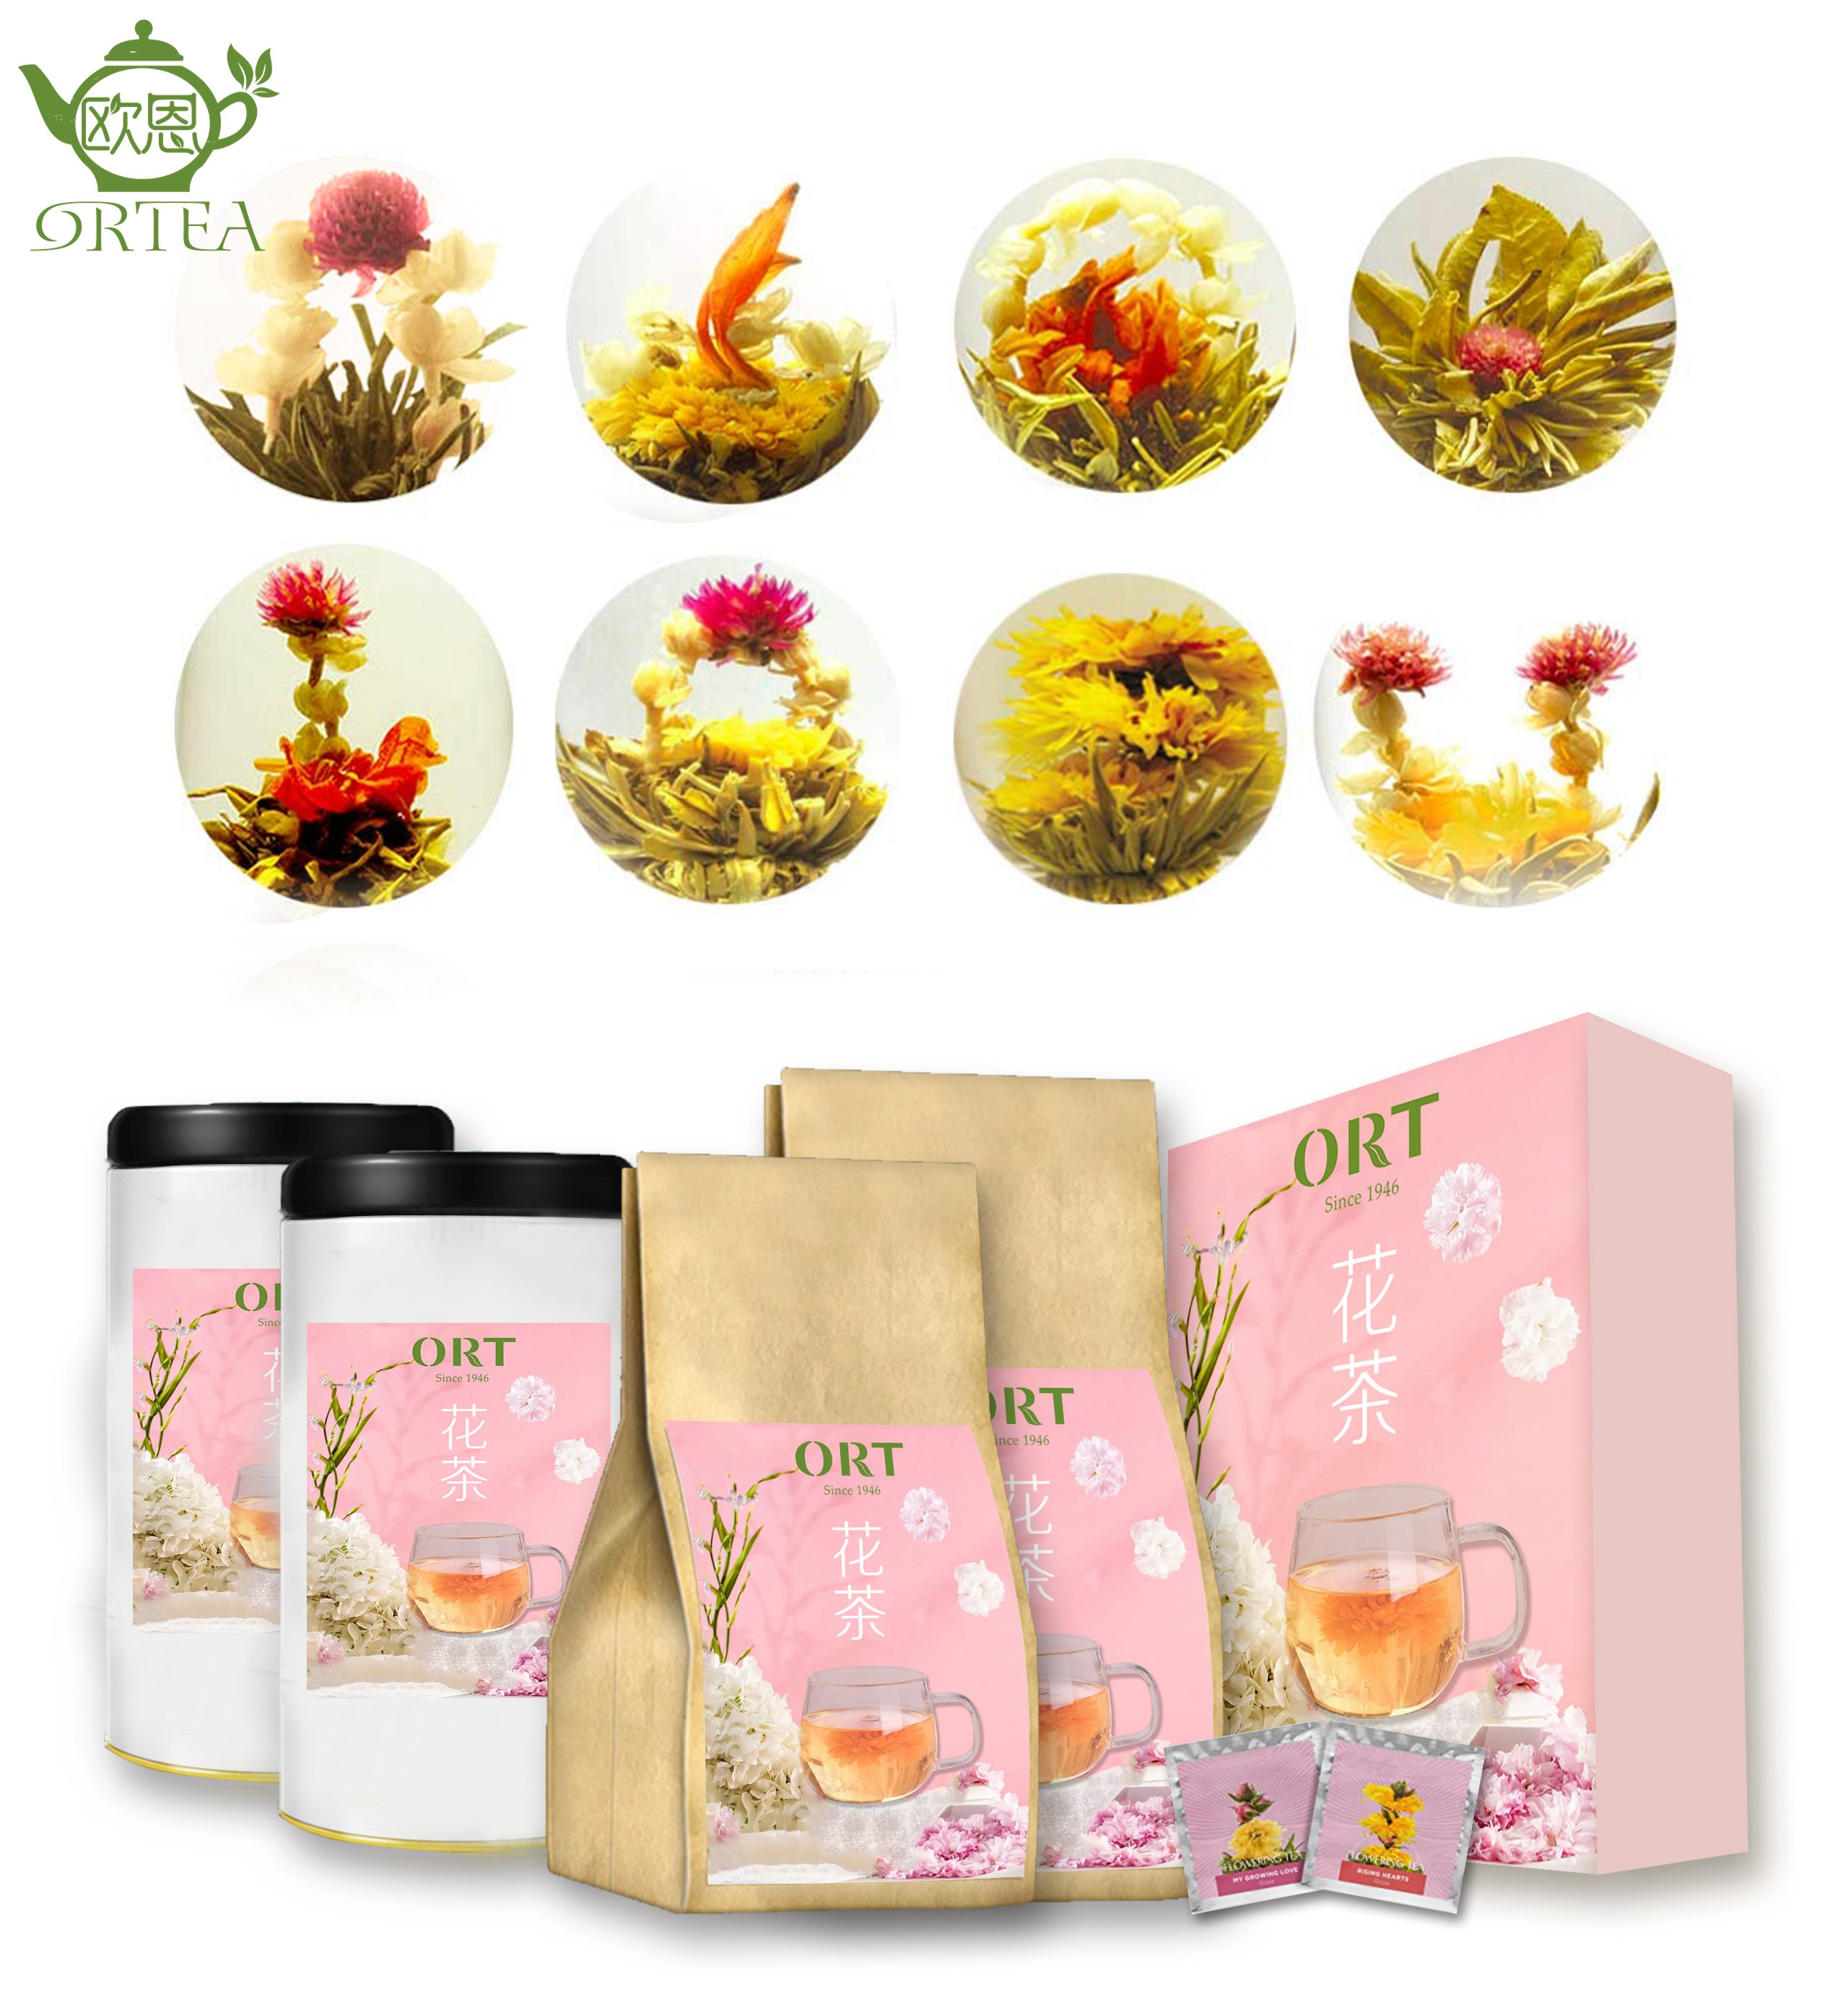 Green Tea based Blooming Tea-